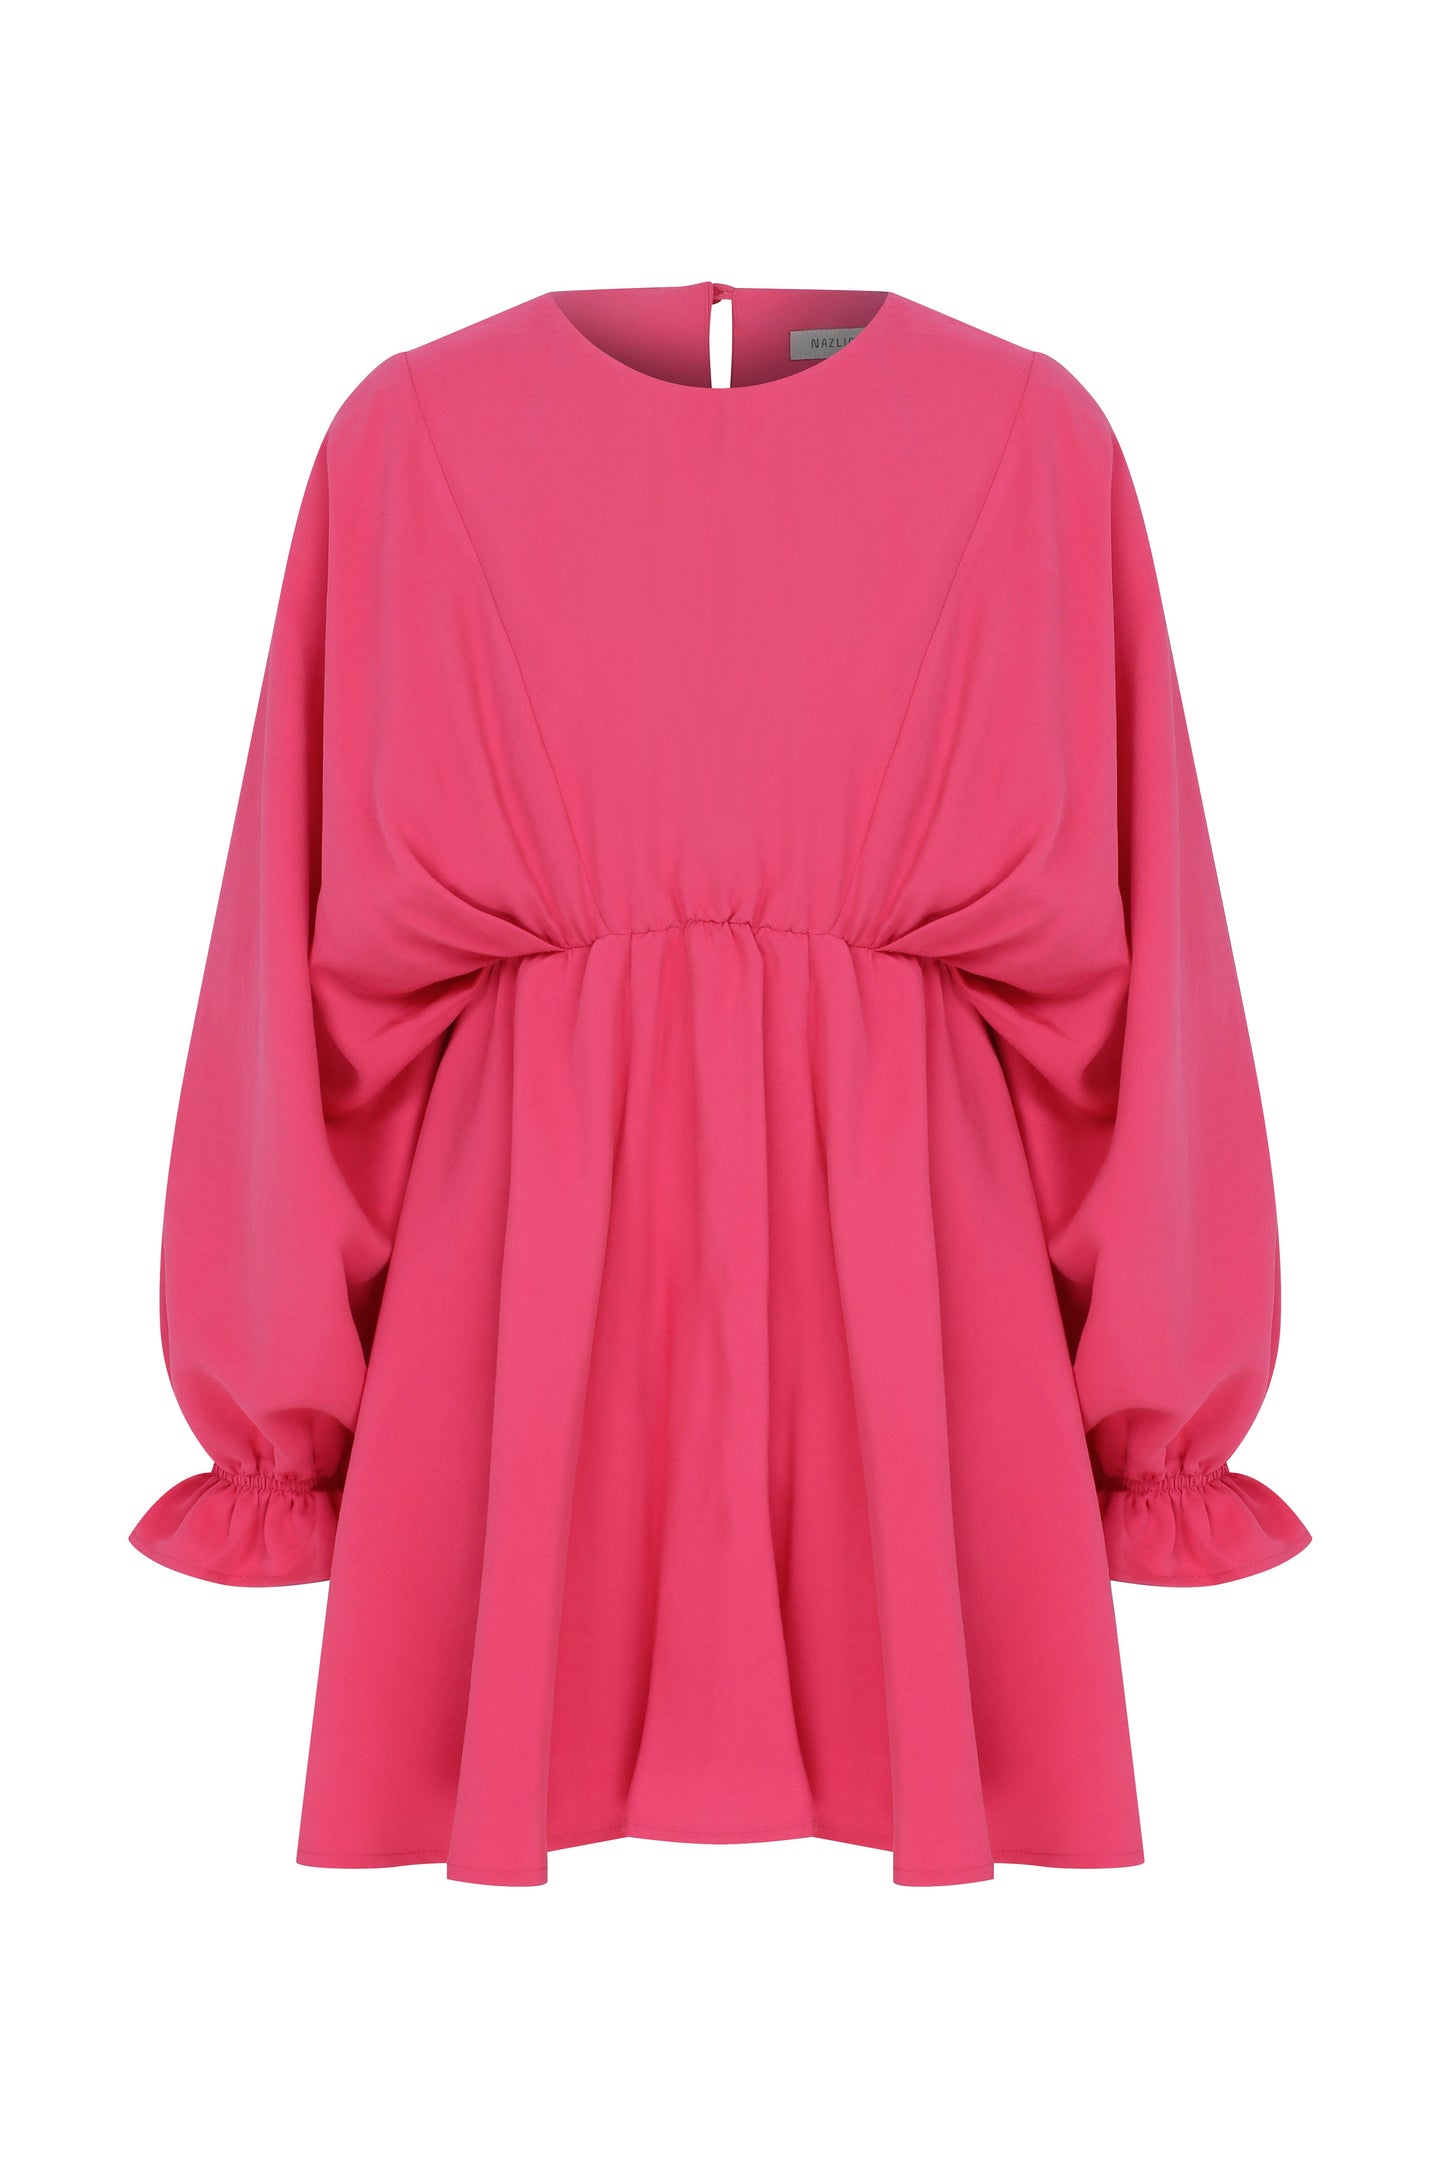 July Ruffled Mini Dress in Virtual Pink